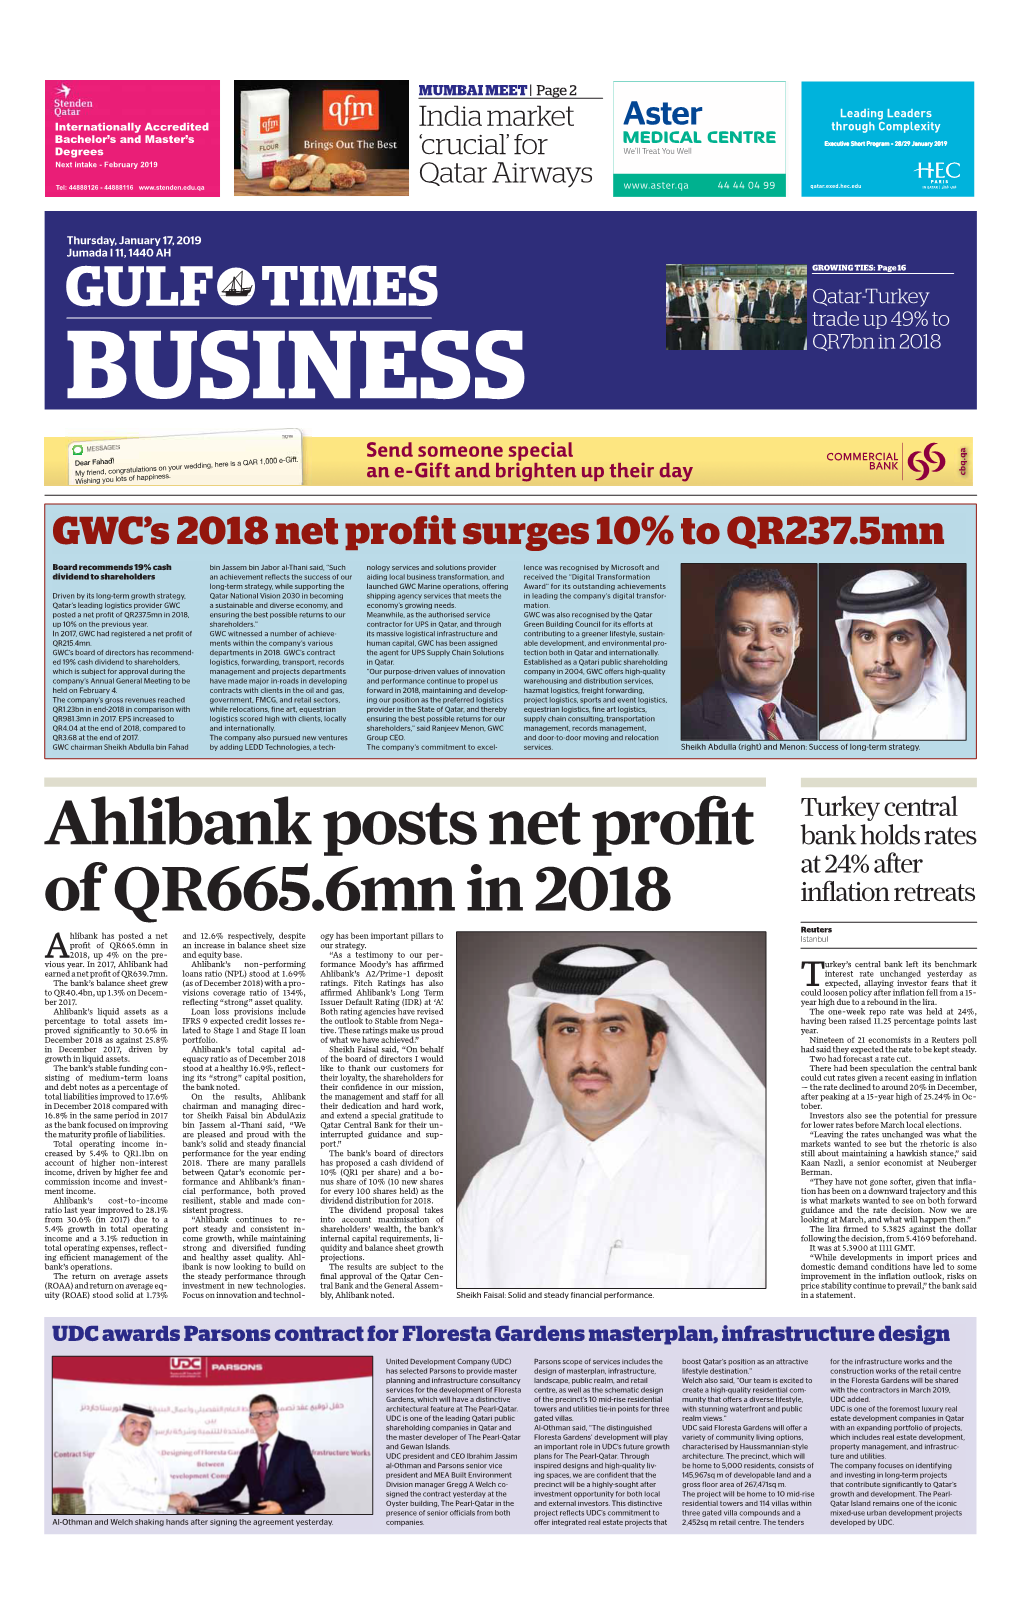 Ahlibank Posts Net Profit of QR665.6Mn in 2018